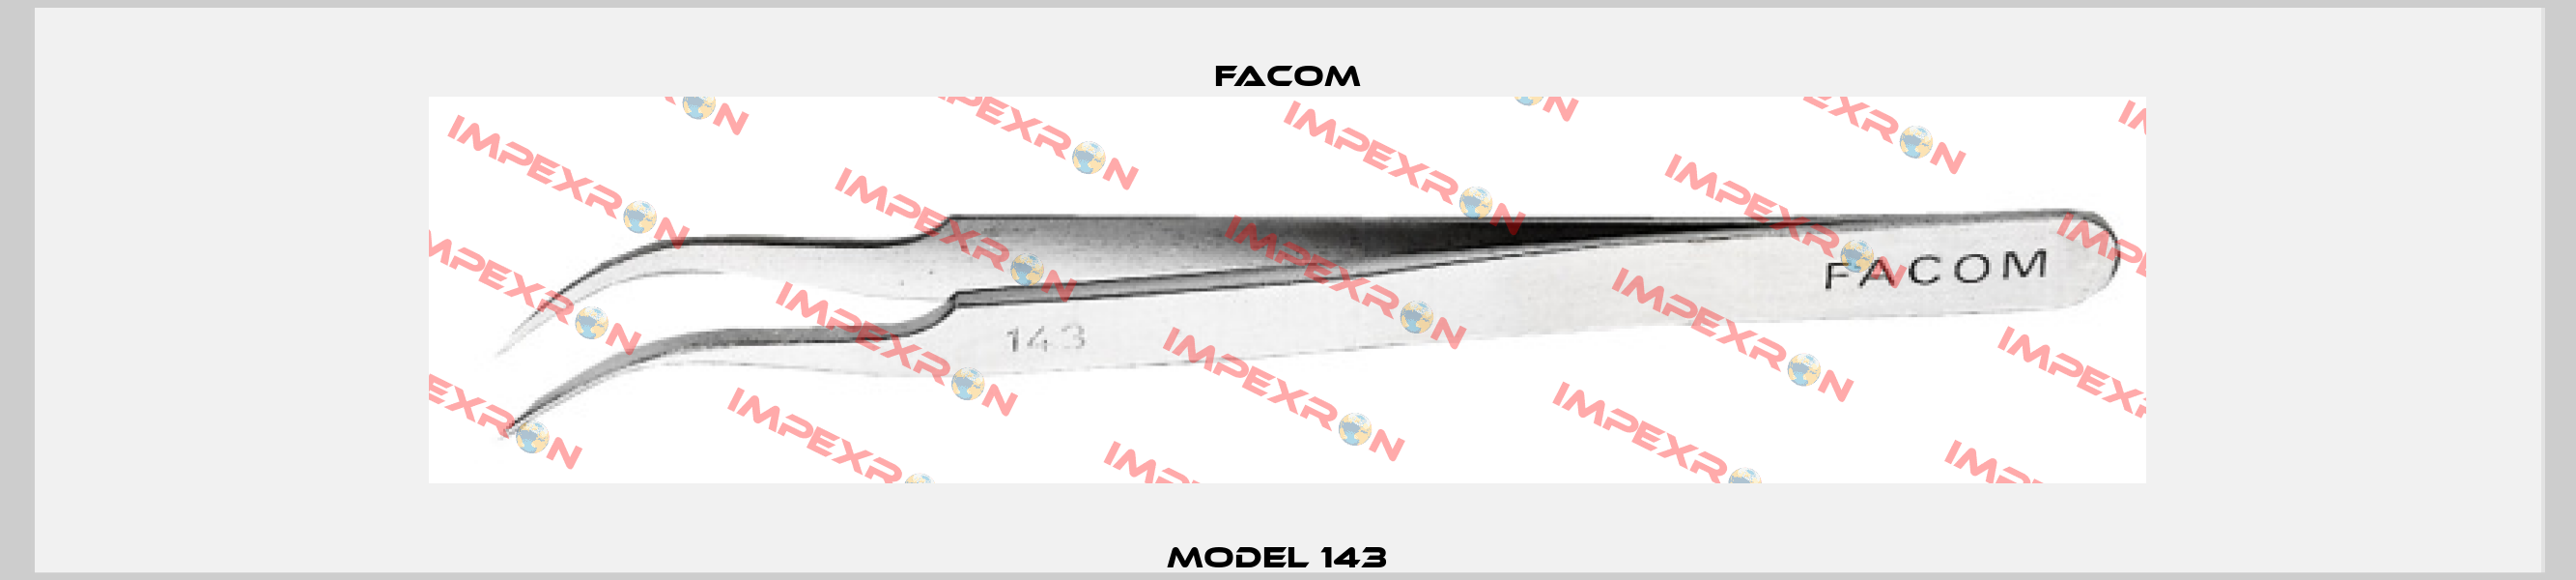 Model 143   Facom